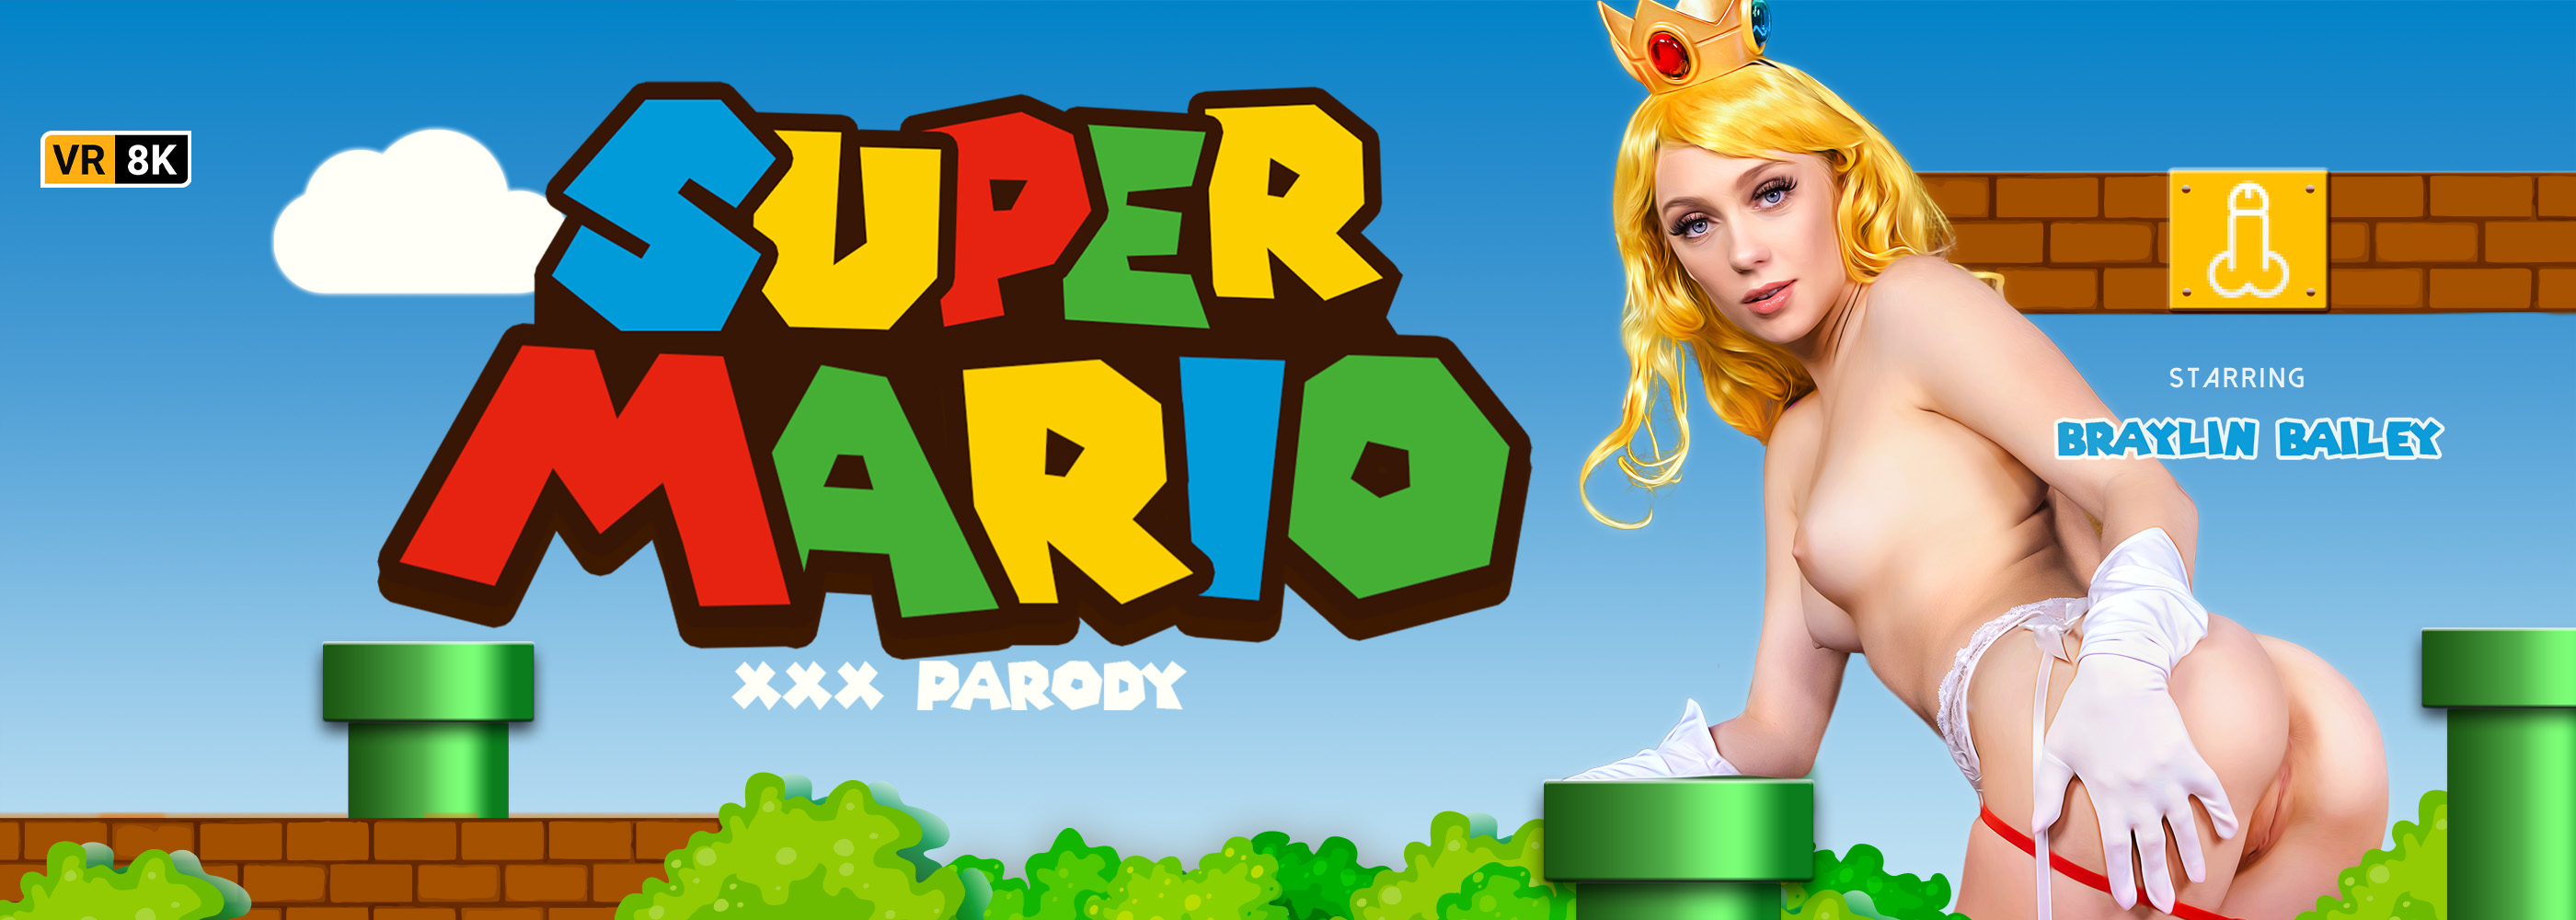 Super Mario (A XXX Parody) - VR Porn Video, Starring Braylin Bailey VR